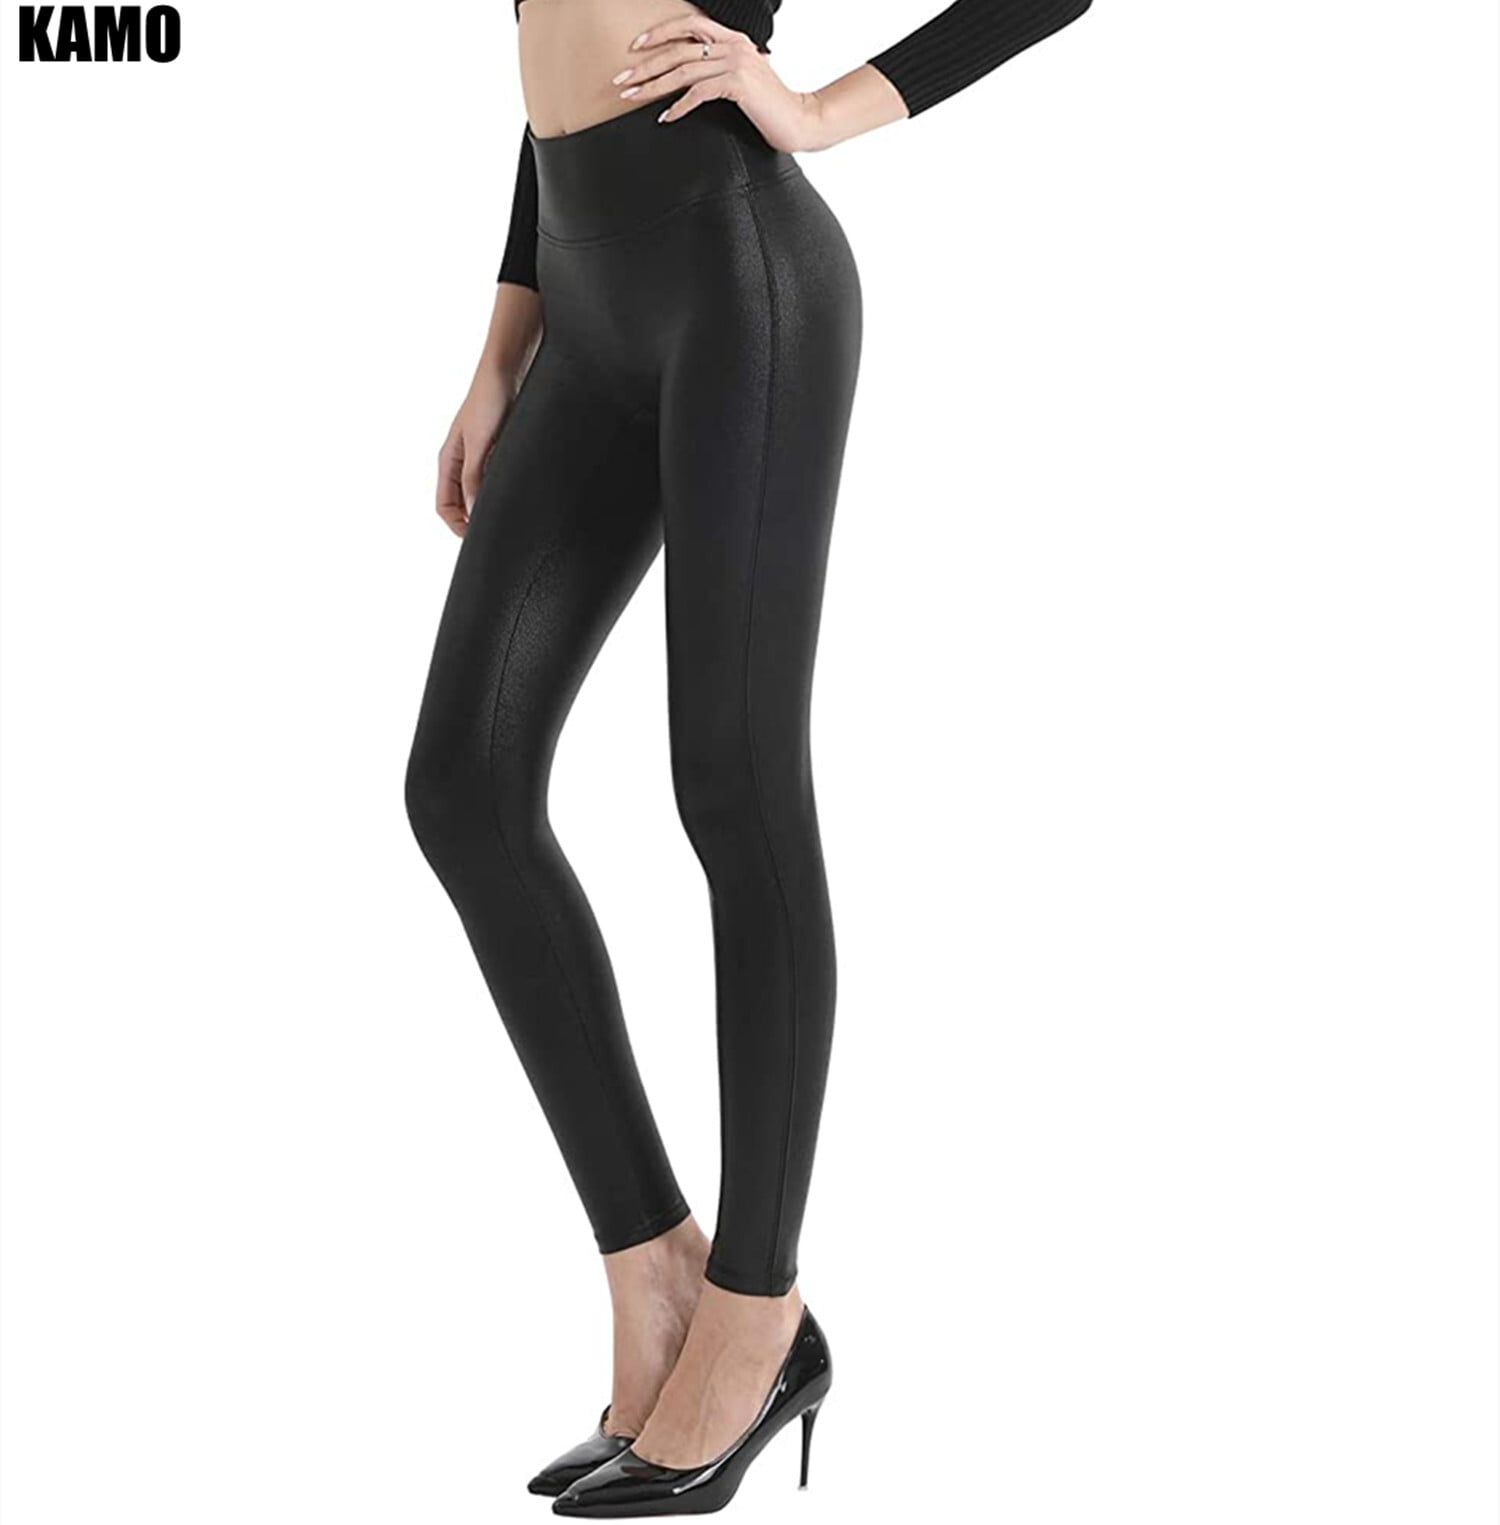 KAMO Women’Plus Size Black Faux Leather Cropped Pants Leather Leggings